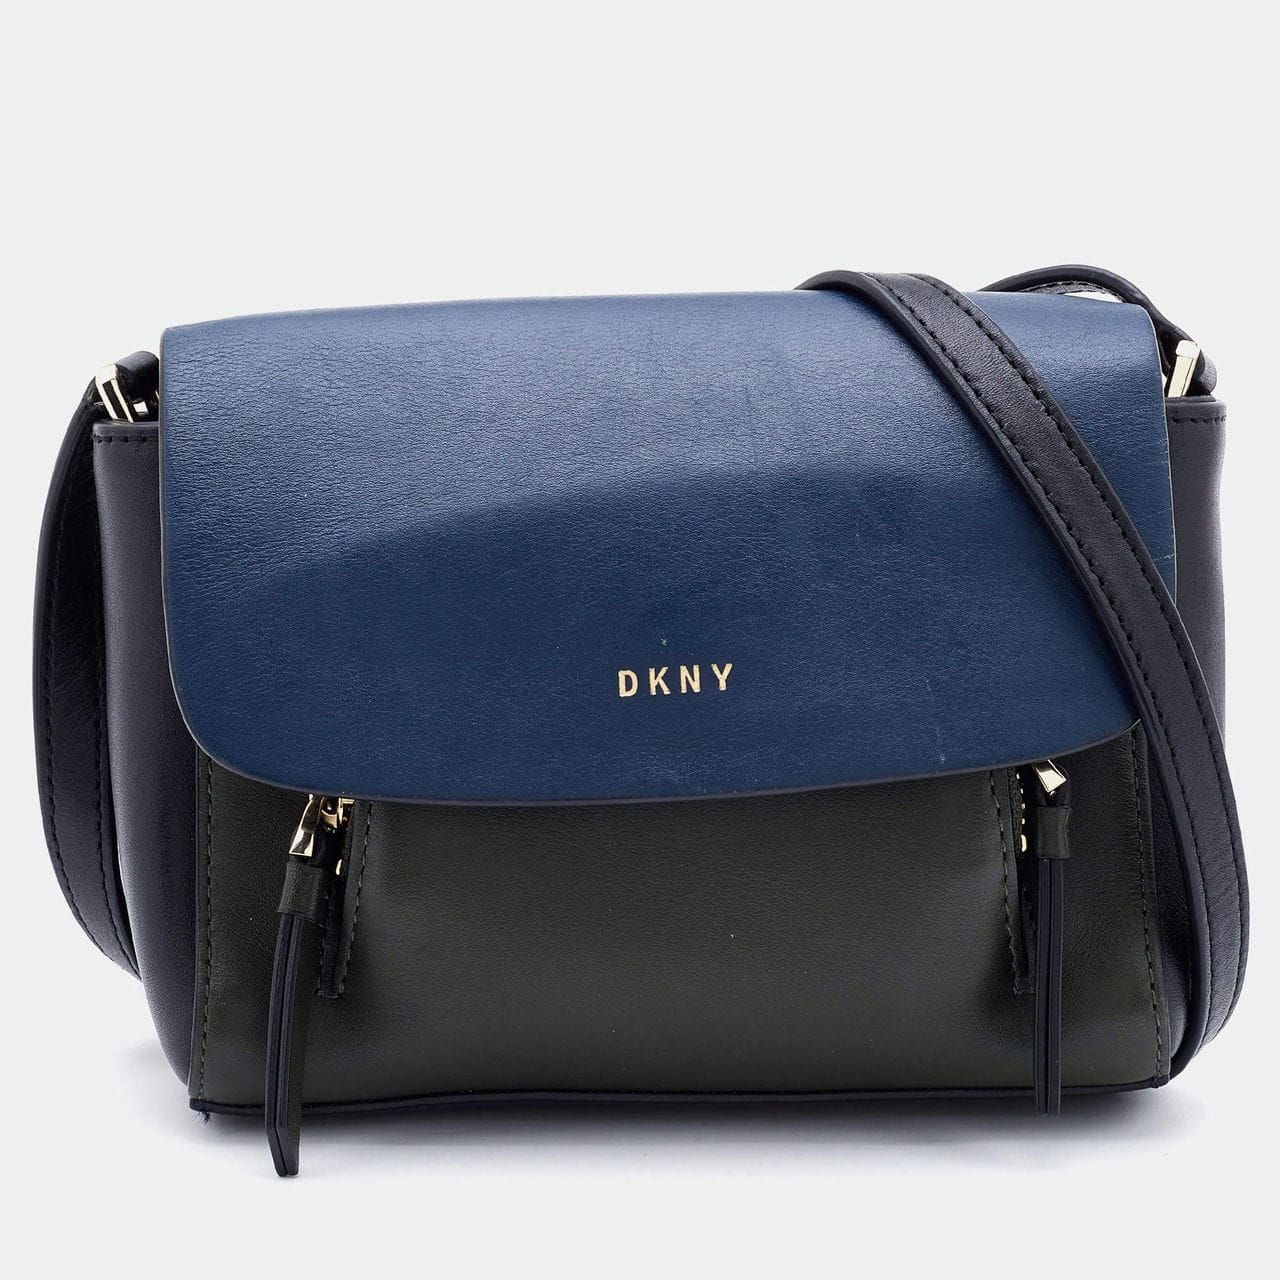 Kildare Village - DKNY Bag Original price €250 Was €165 Grand Slam